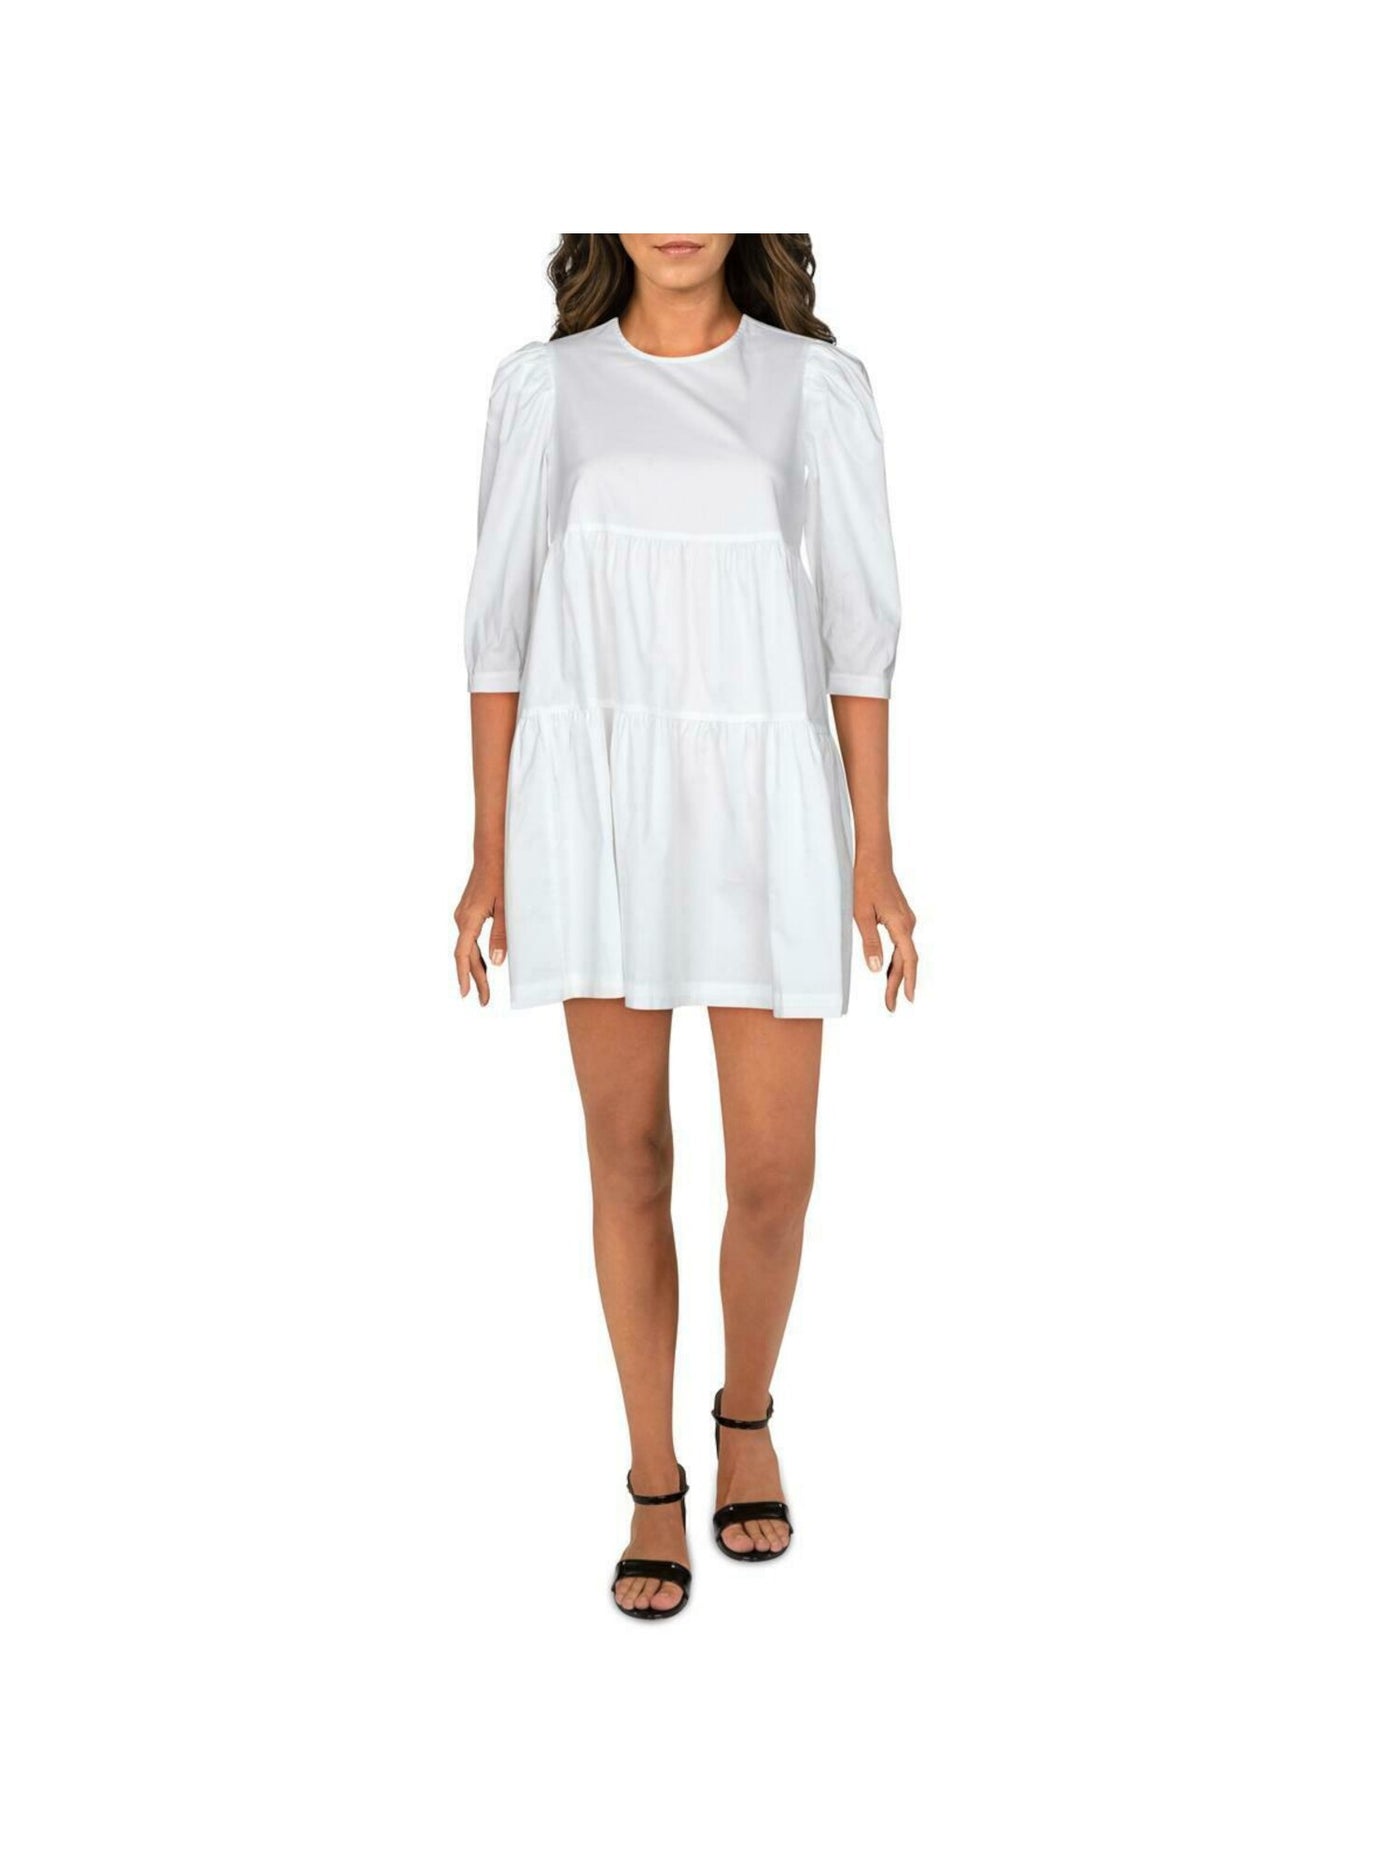 DANIELLE BERNSTEIN Womens White Textured Woven 3/4 Sleeve Mini Baby Doll Dress S